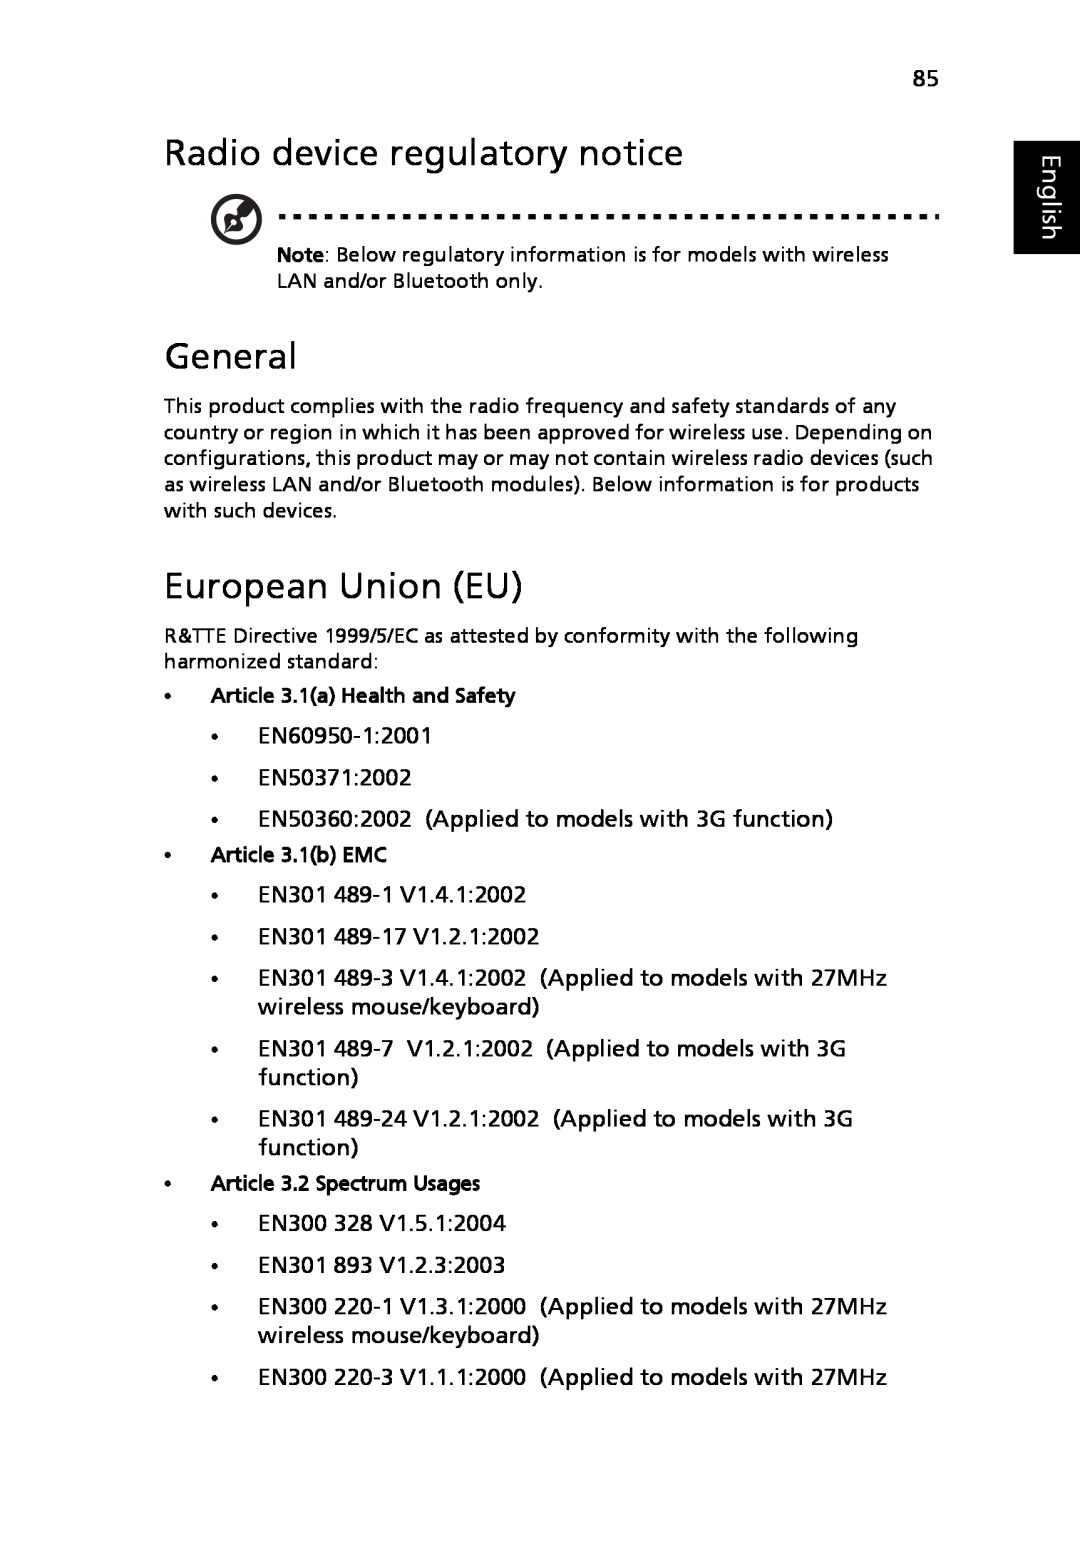 Acer 5010 Series, 5410 Series manual Radio device regulatory notice, General, European Union EU, English 